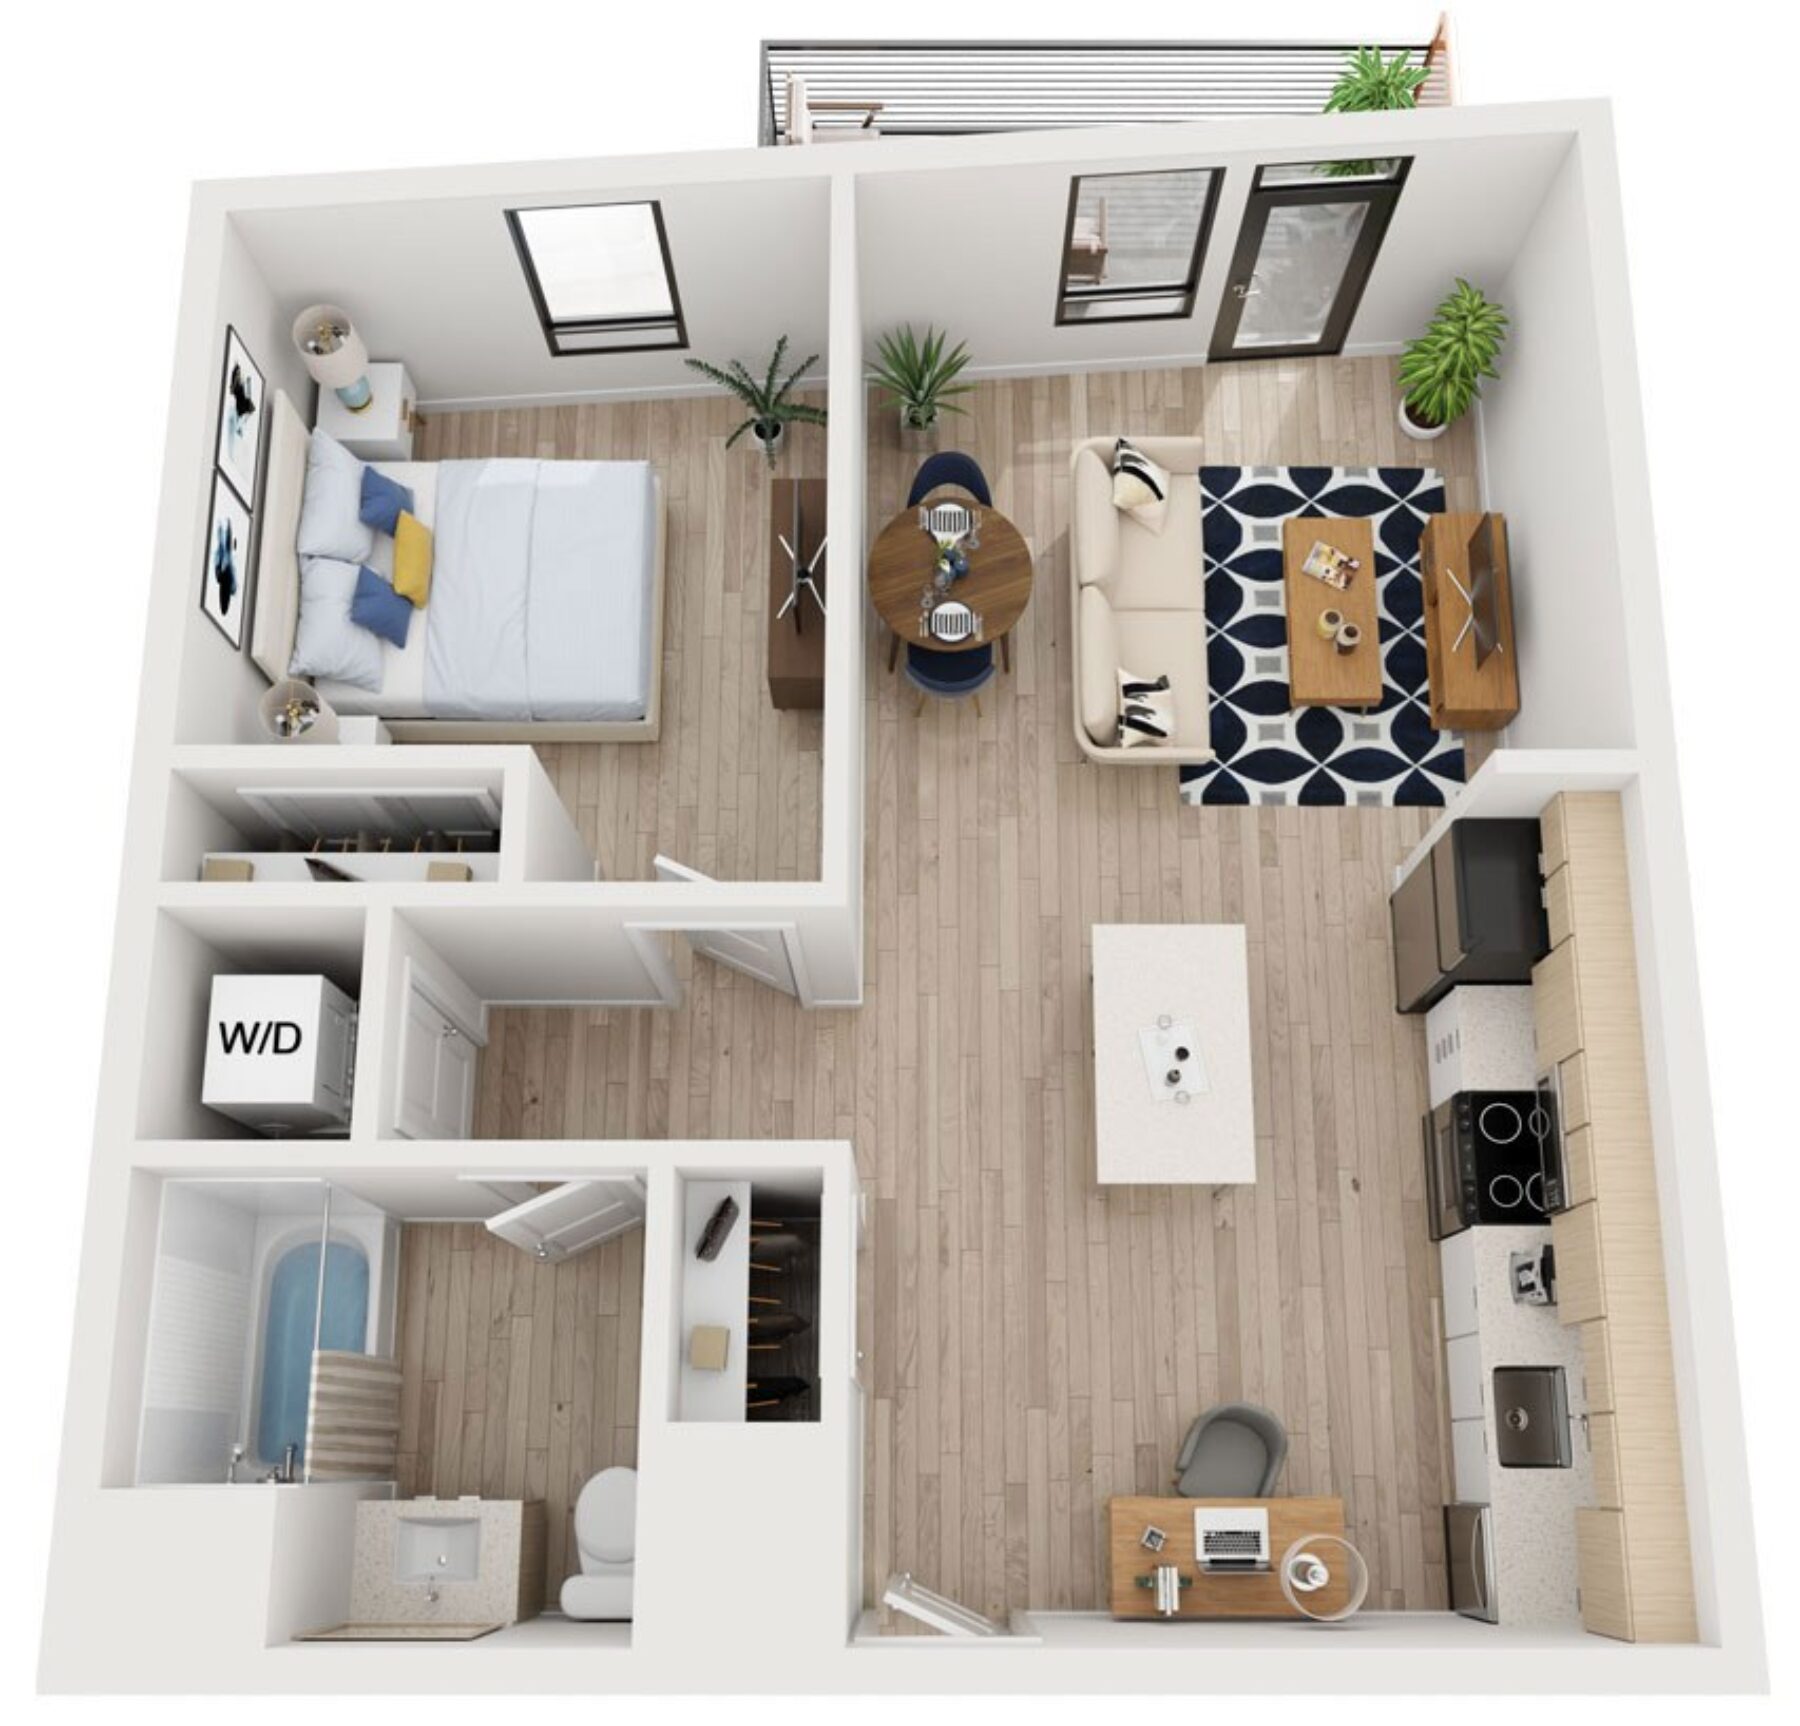 Plan Image: B6 - One Bedroom